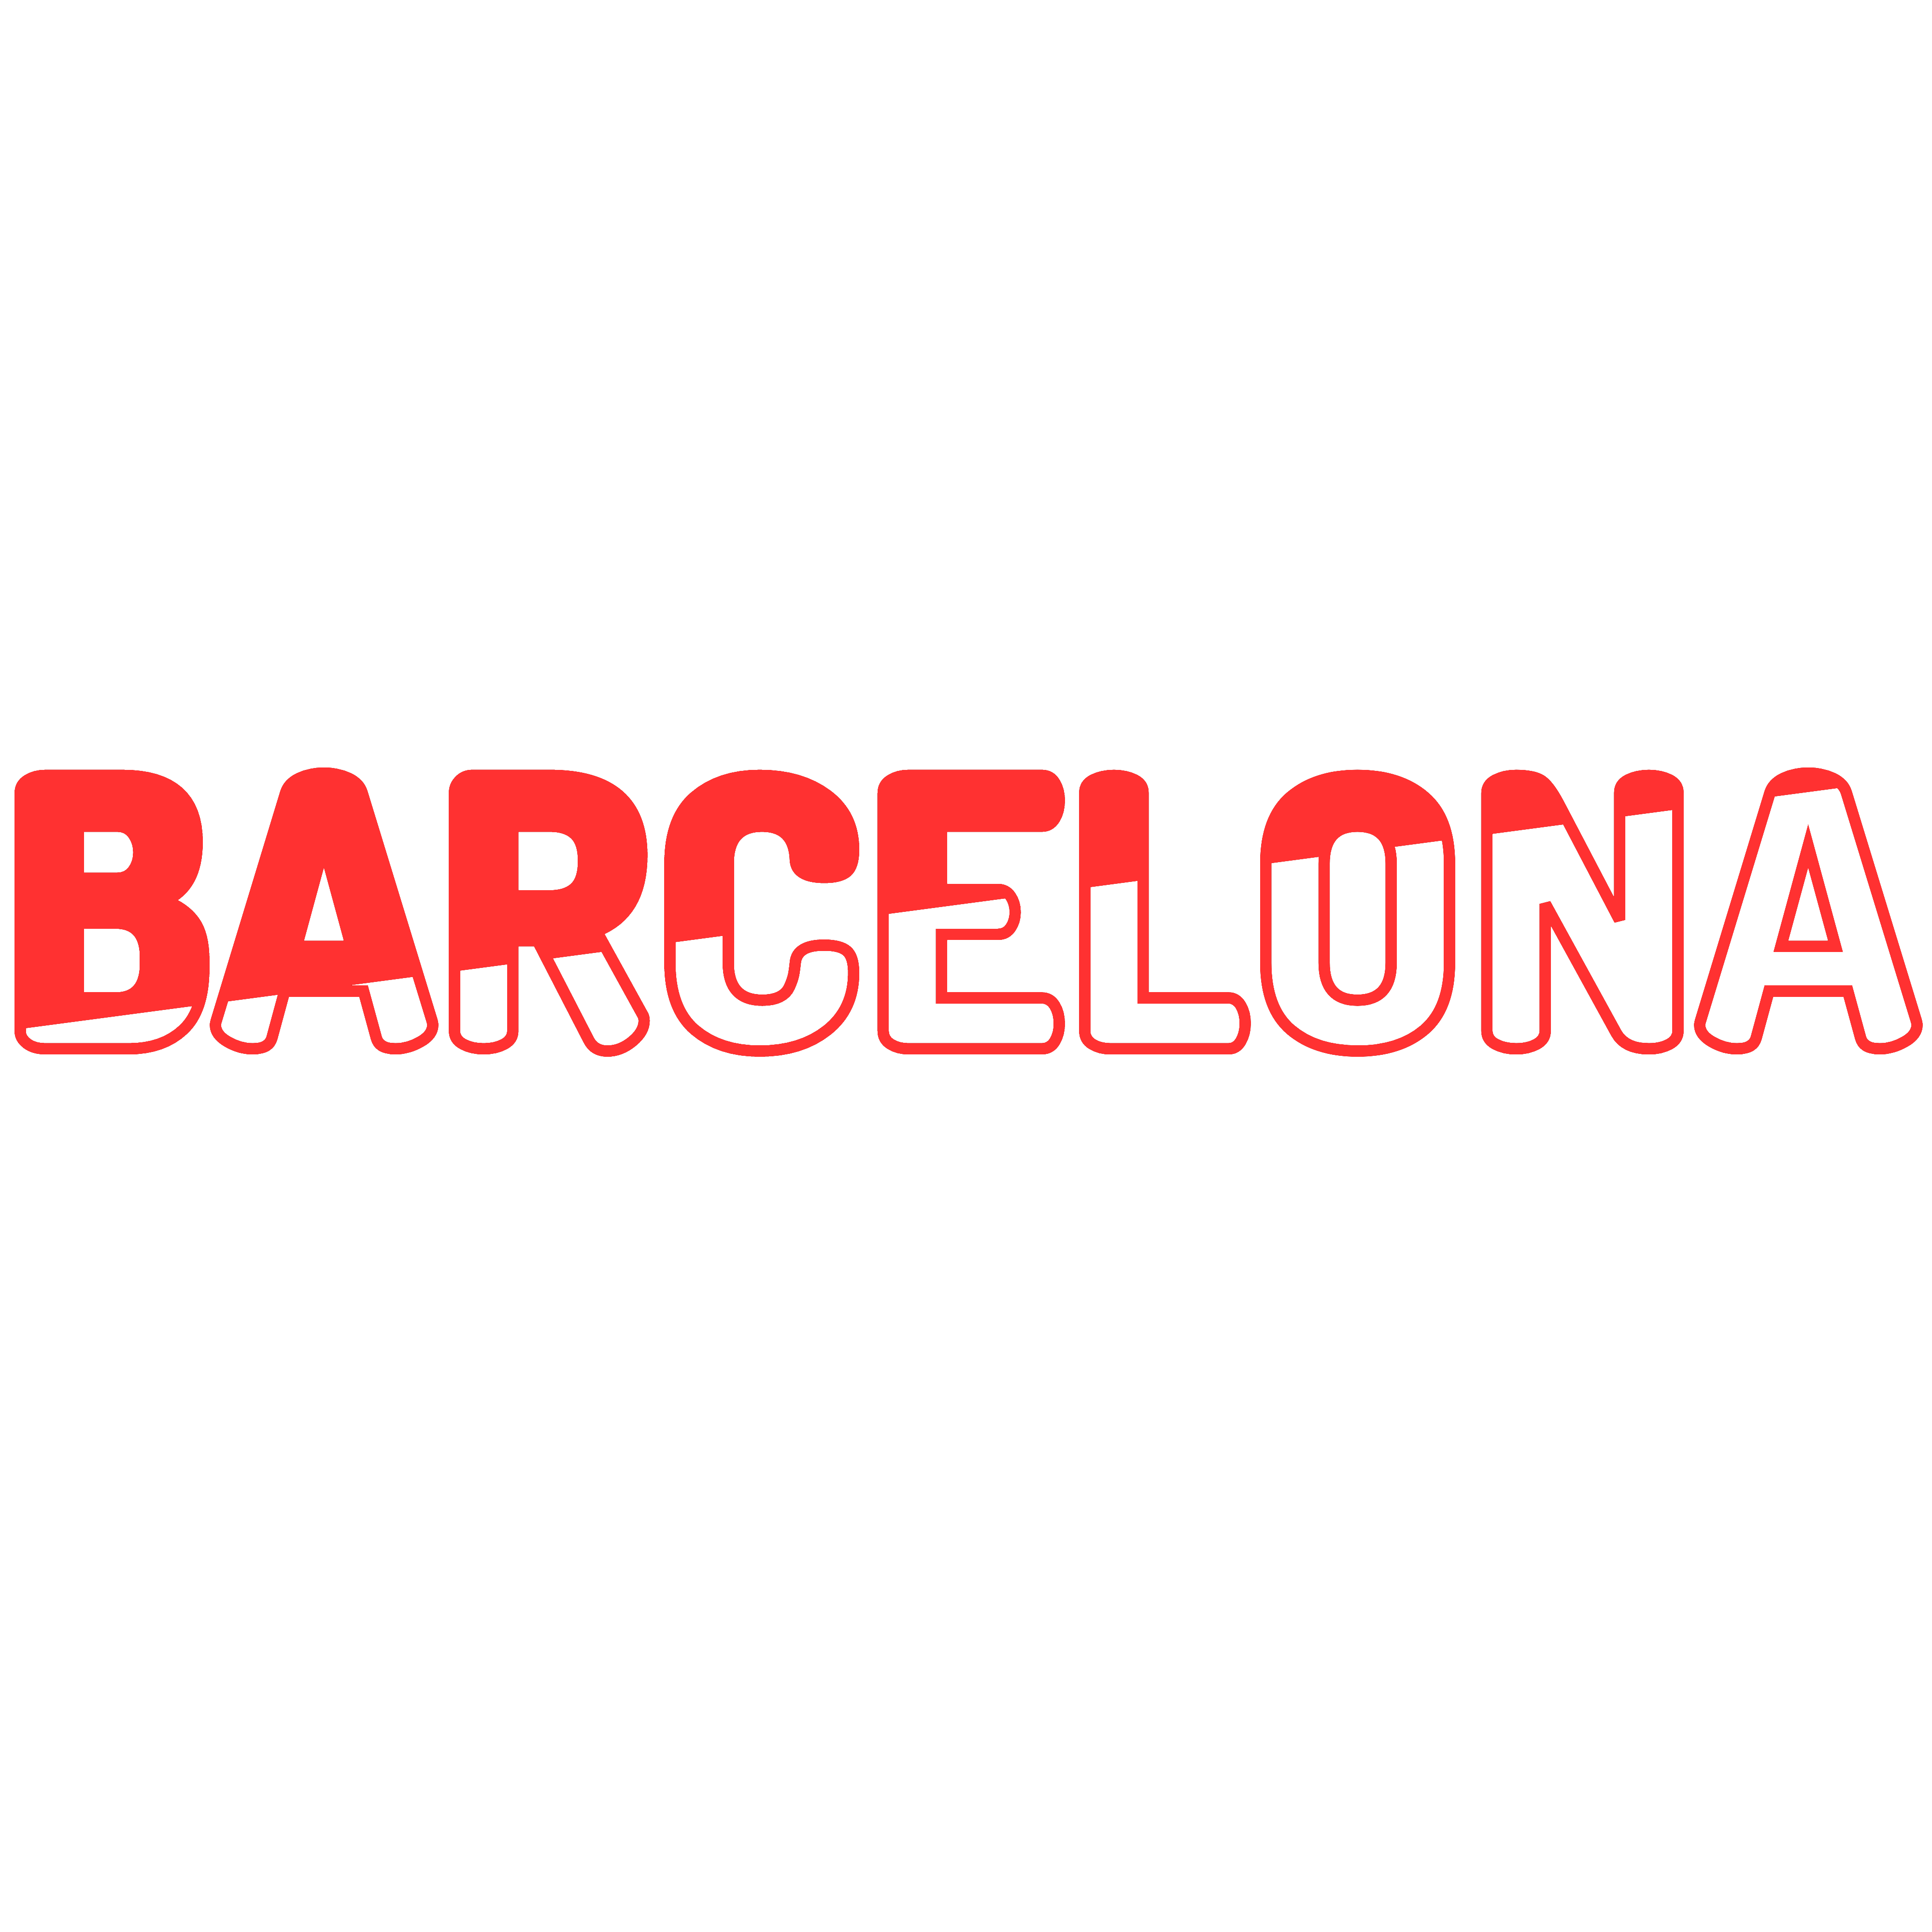 barcelona 1 1 720